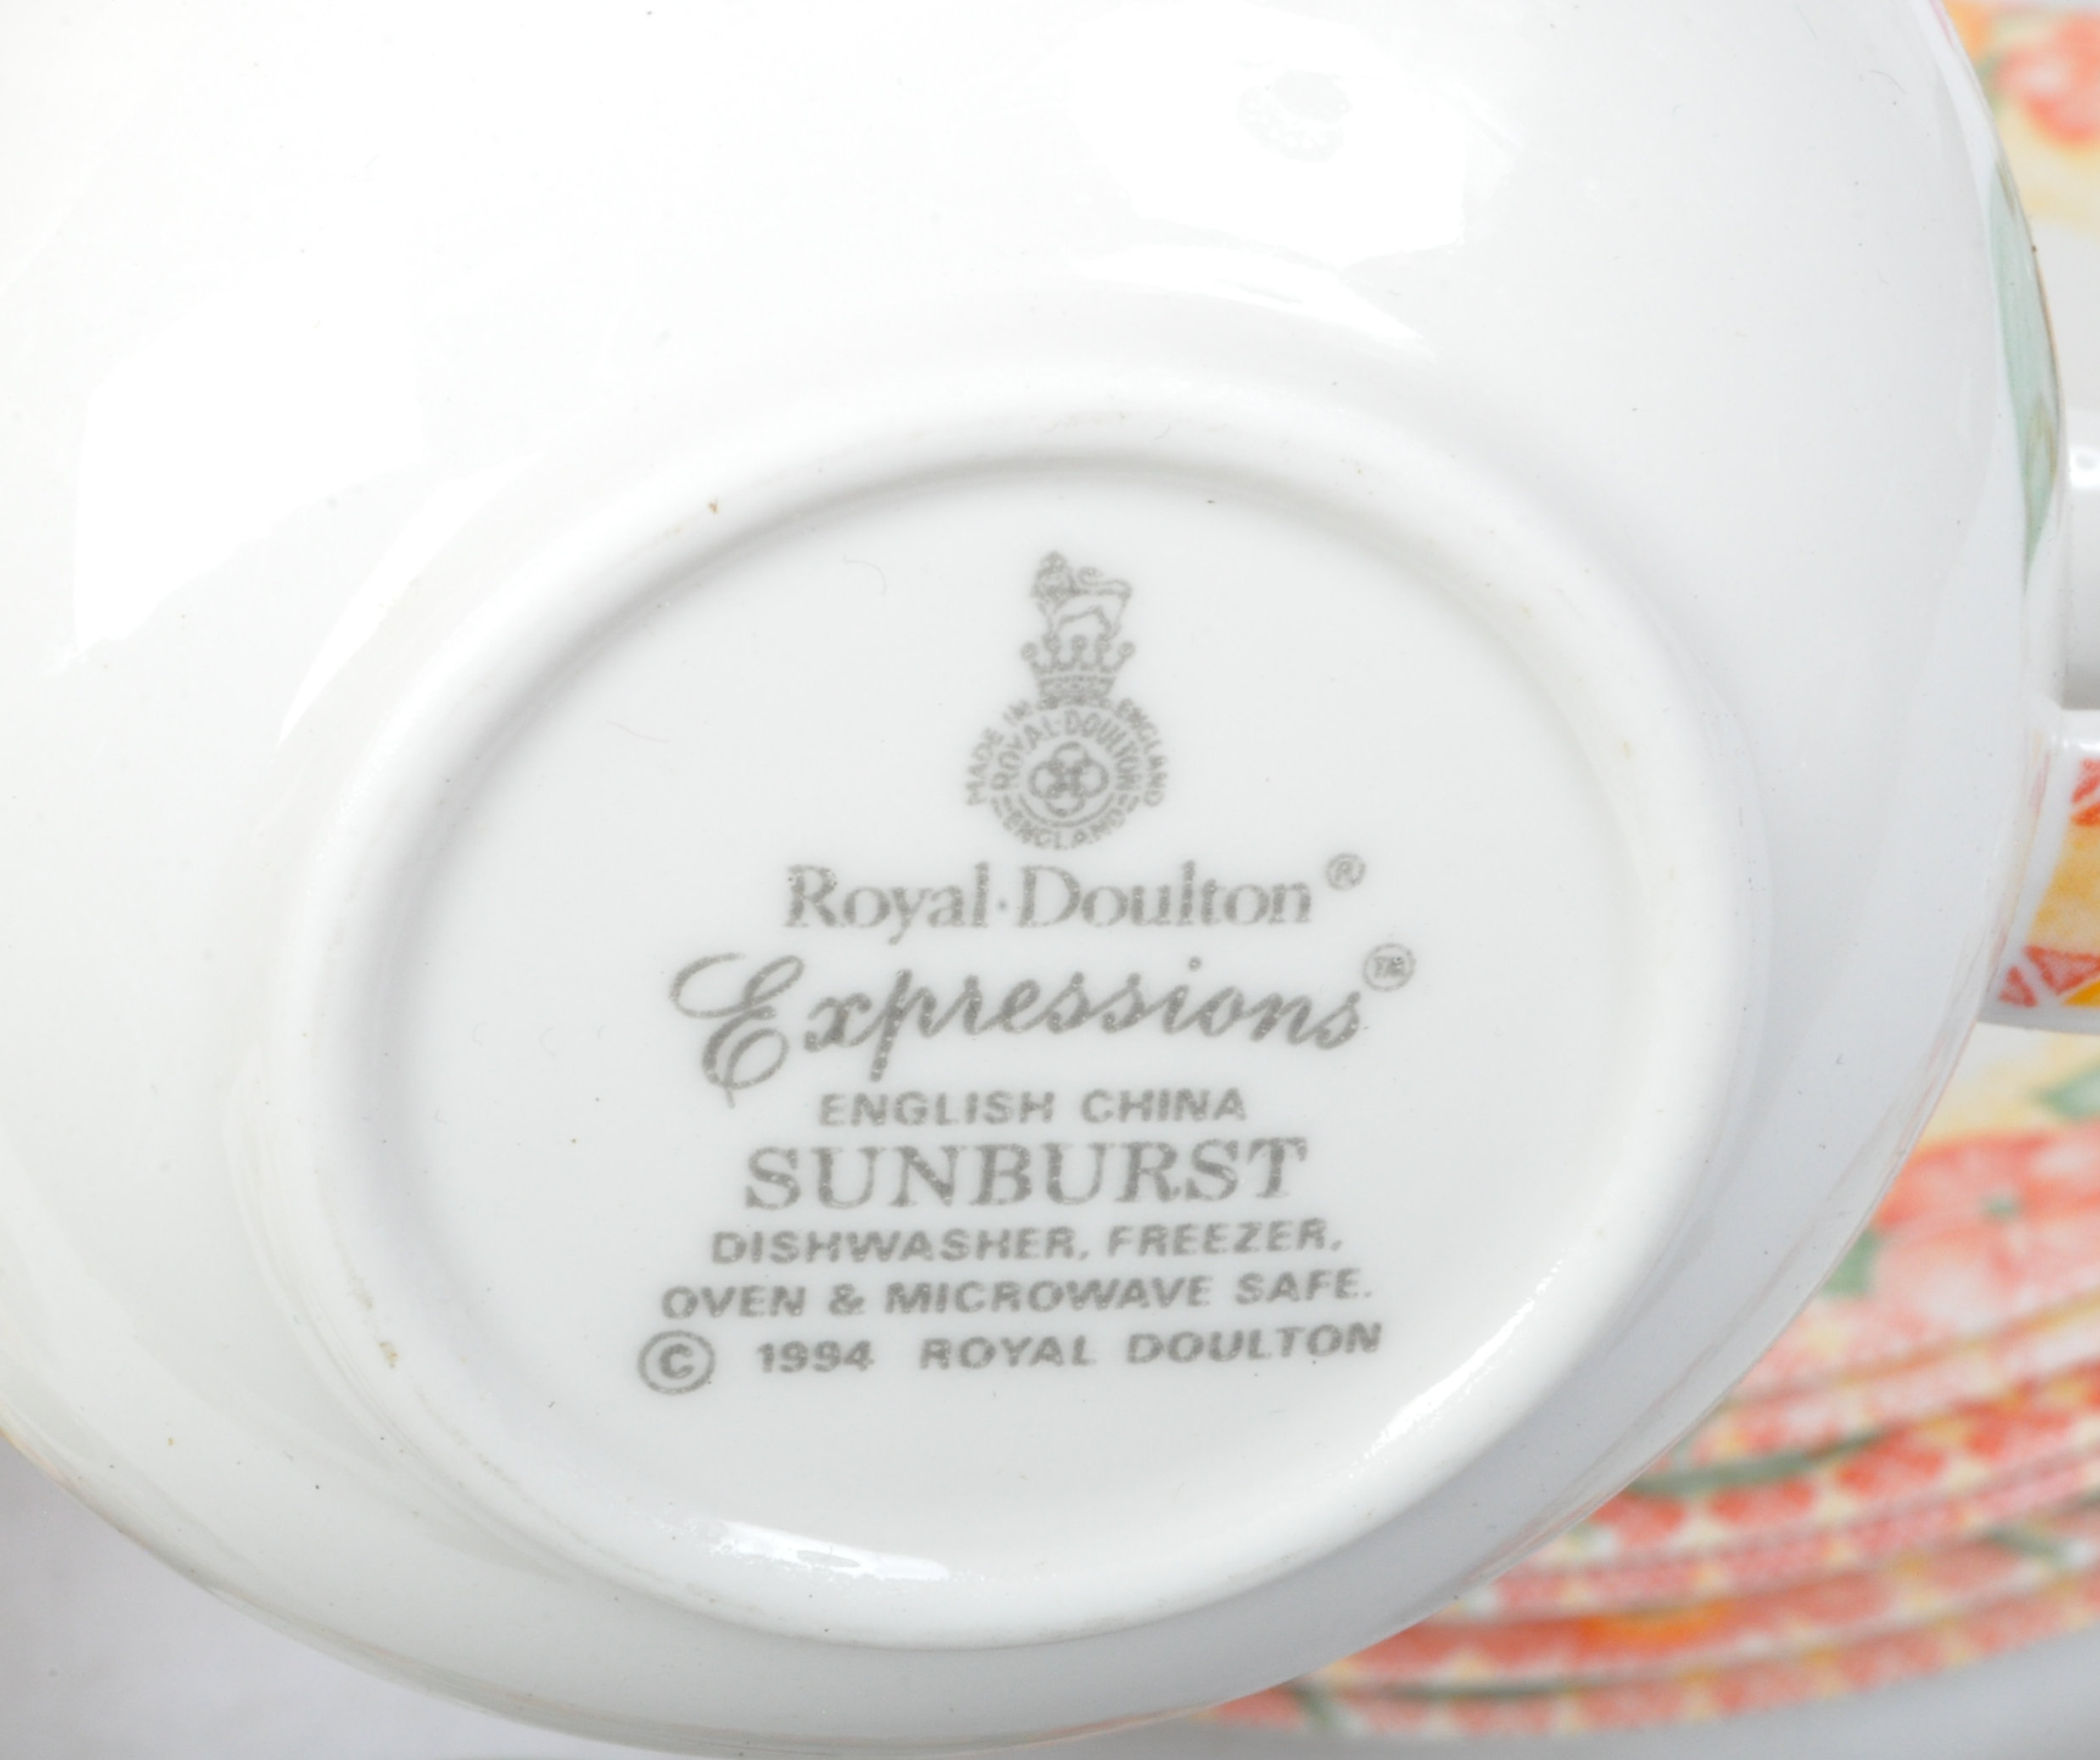 ROYAL DOULTON - EXPRESSIONS - SUNBURST TEA SERVICE - Image 6 of 6